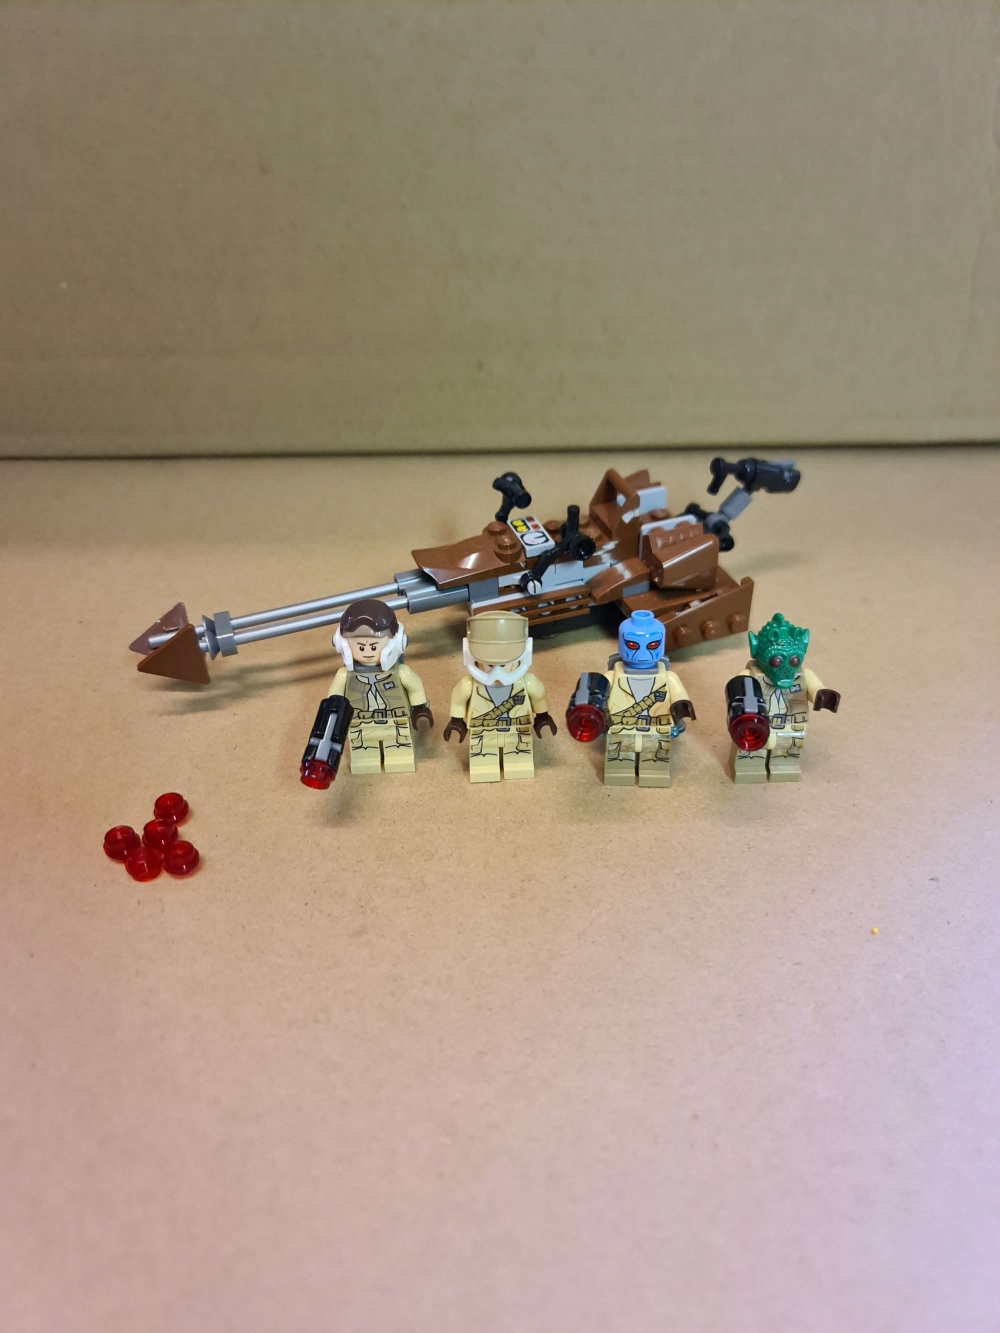 Sett 75133 fra Lego Star Wars: Battlefront serien.
Meget pent. Komplett uten manual.